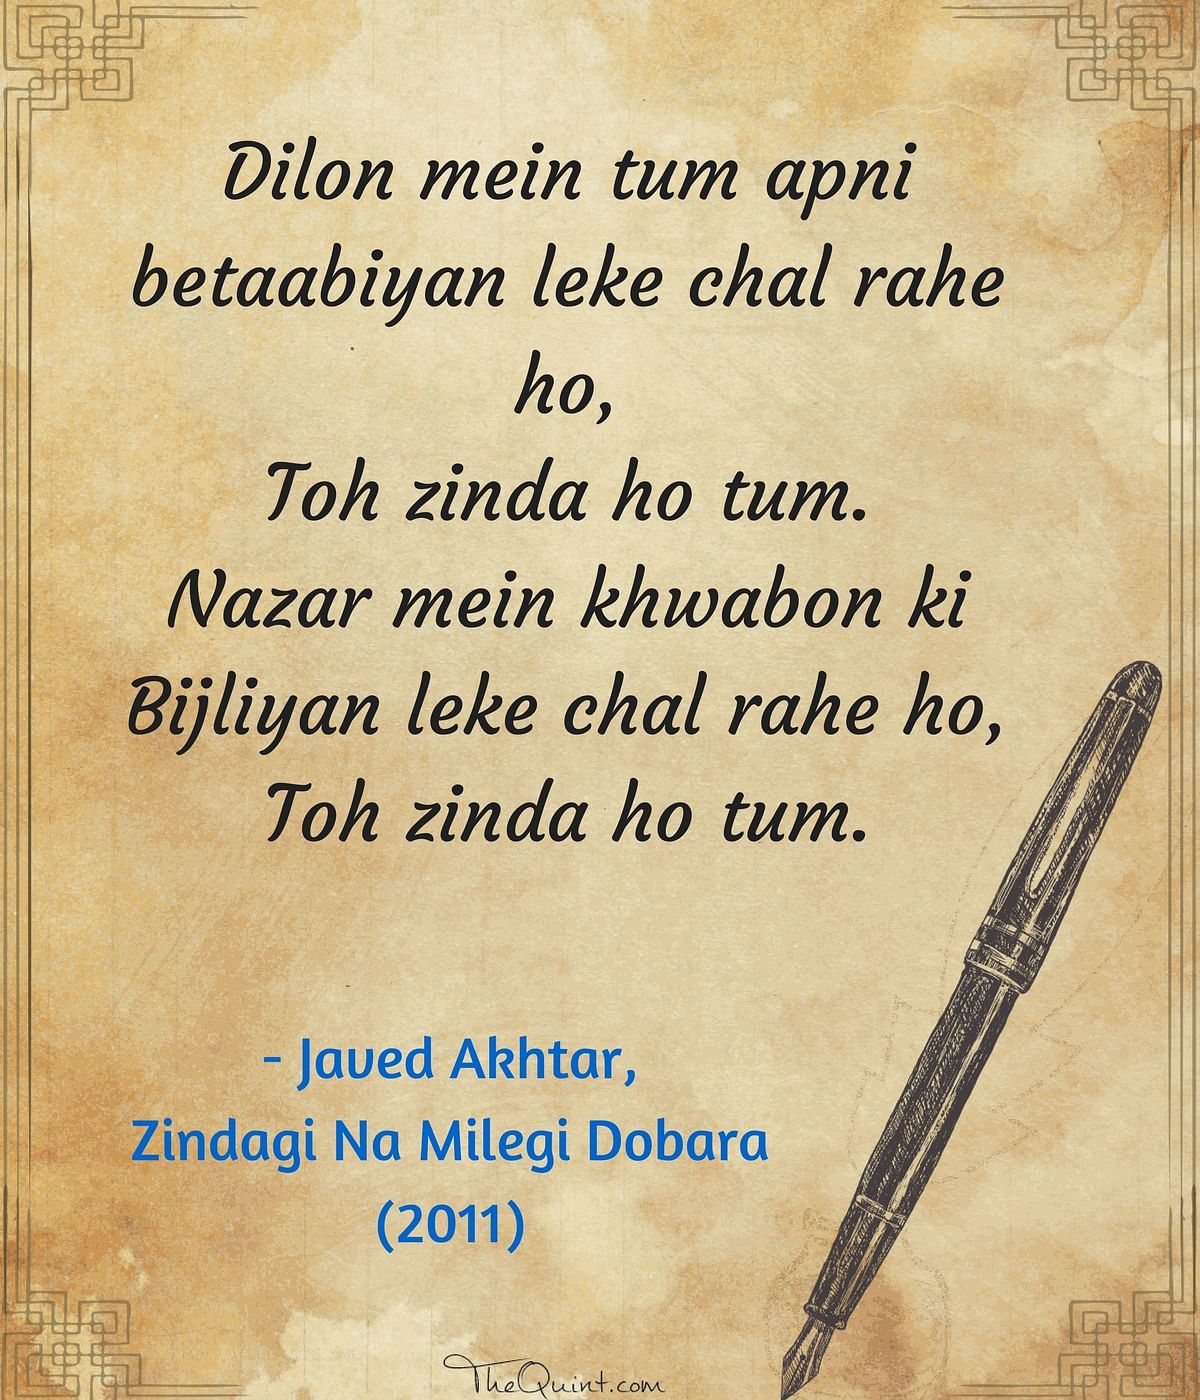 Read Javed Akhtar and his grandfather Muztar Khairabadi’s poetic takes on life, love and childhood. 